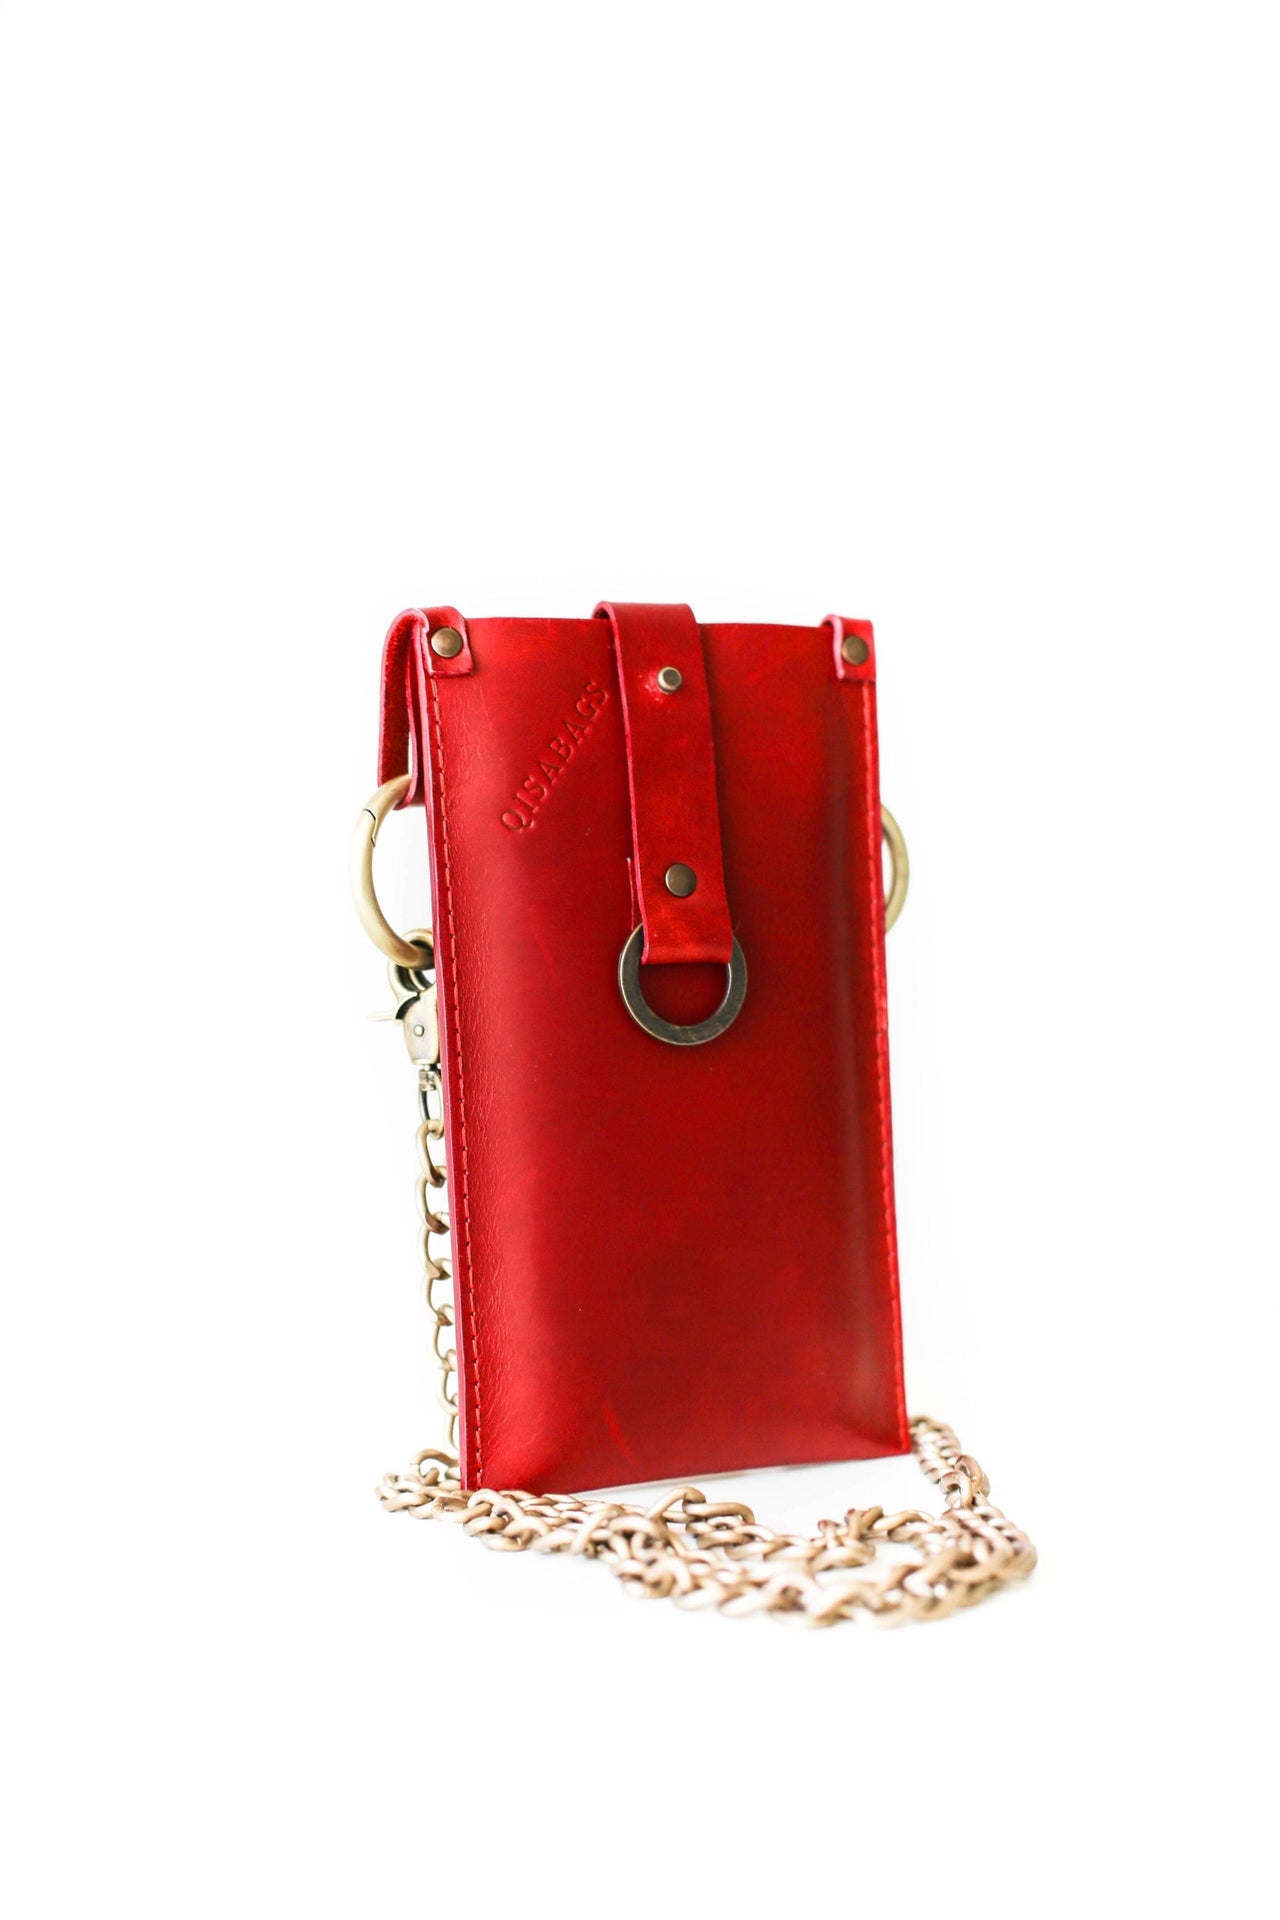 Designer leather bag for phone